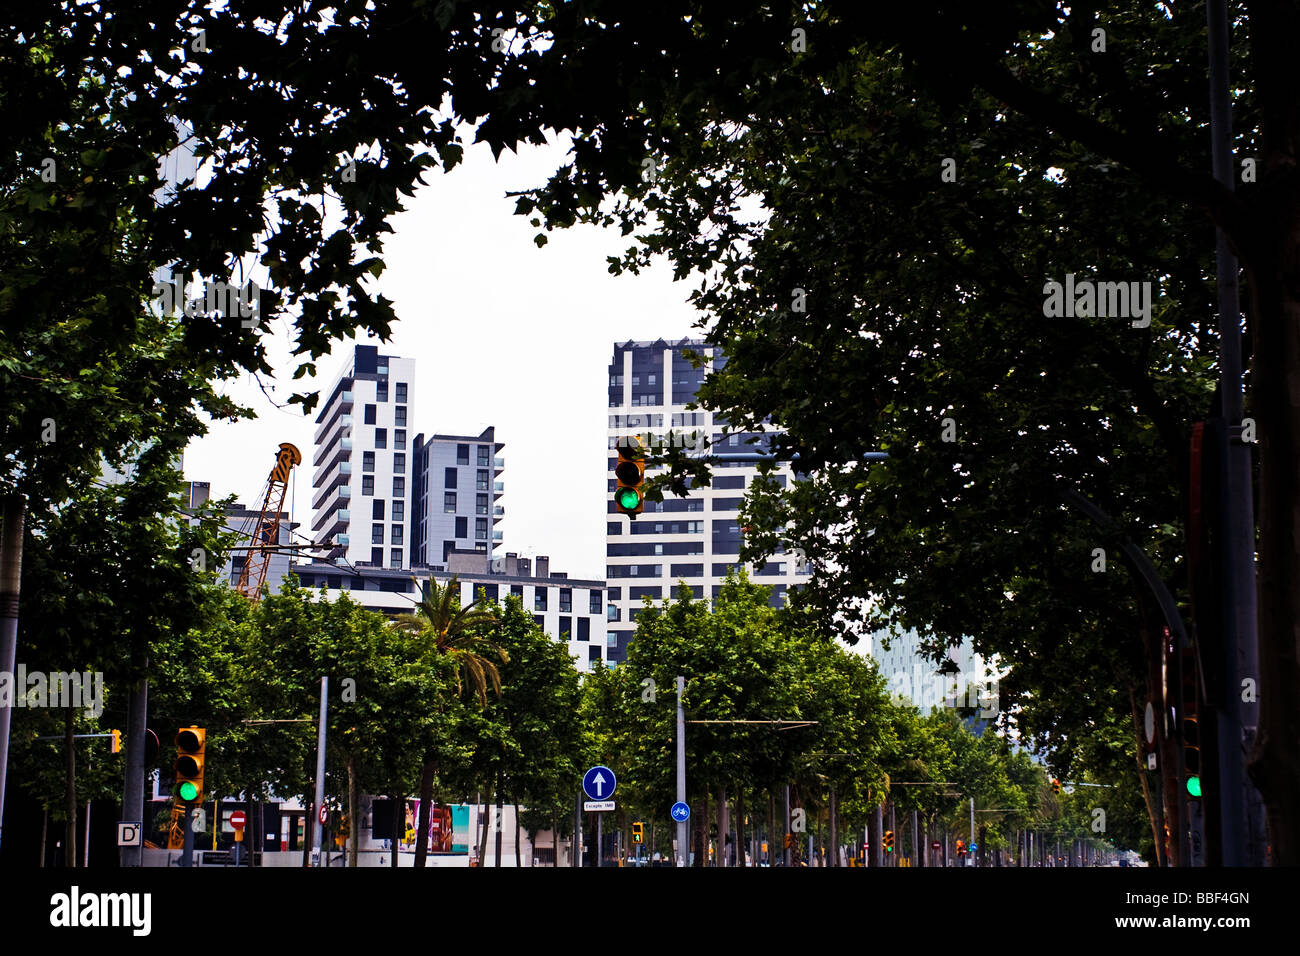 Los edificios altos enmarcado por árboles, Avenida Diagonal (Diagonal) Barcelona, España Foto de stock